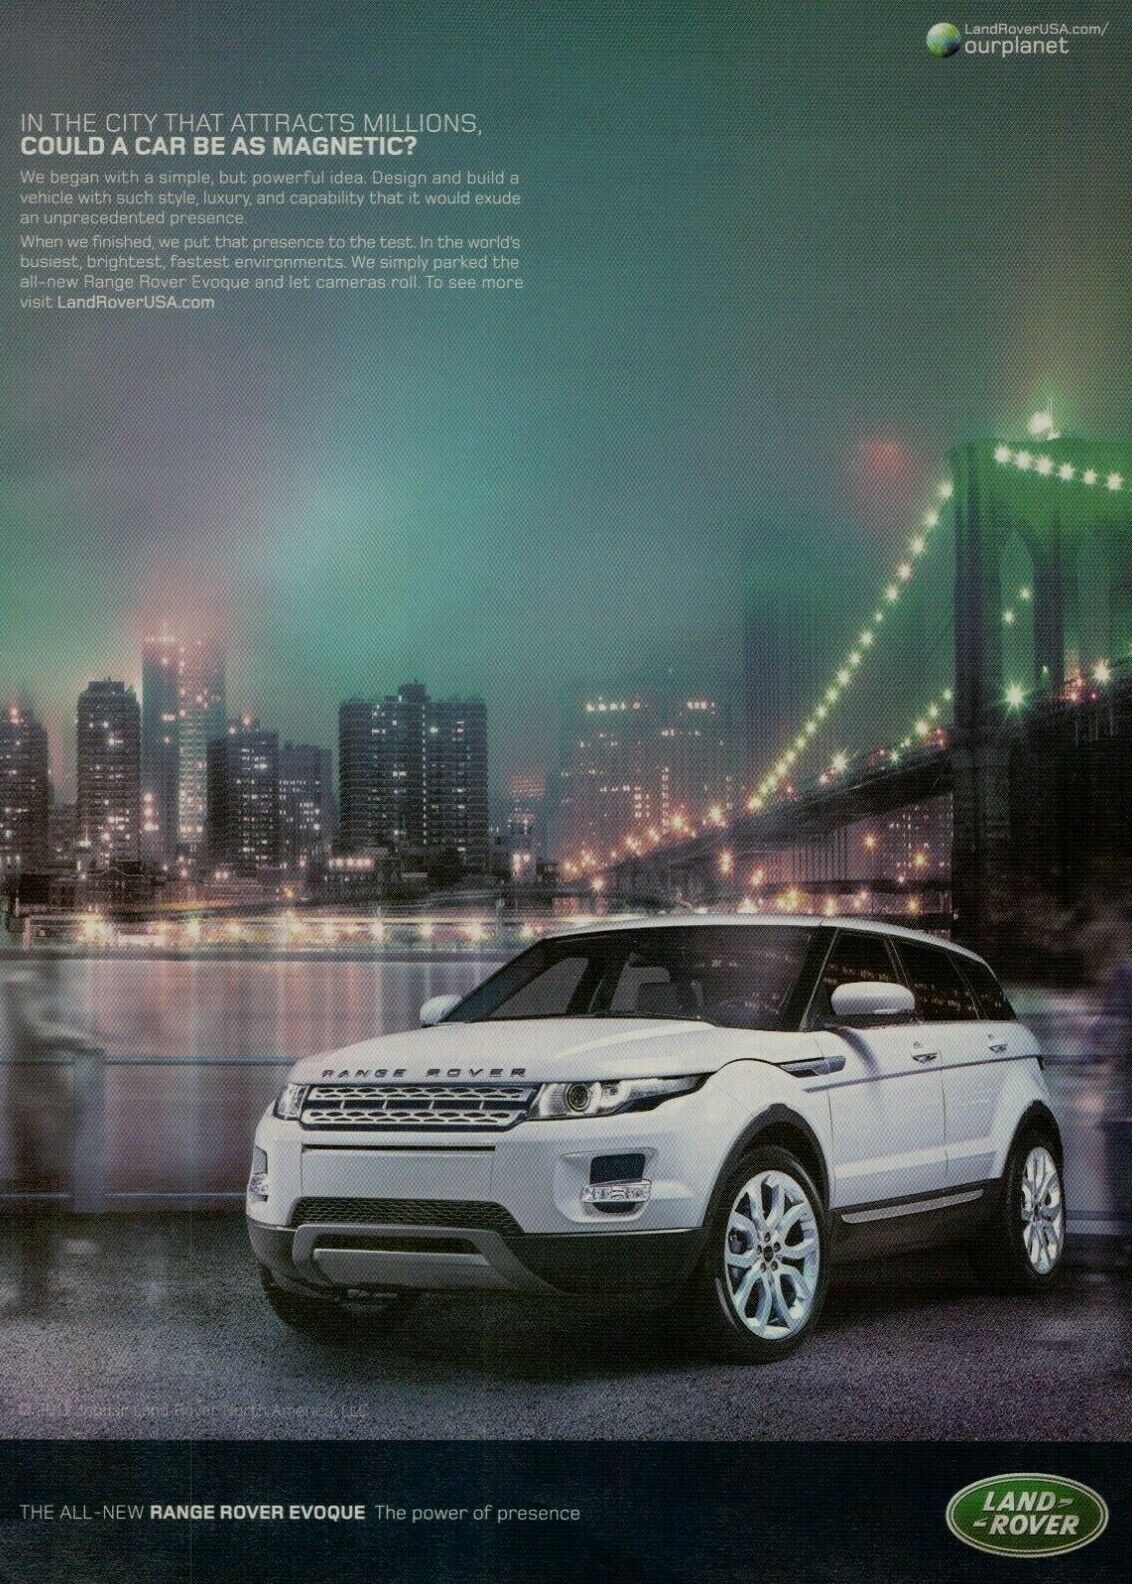 2011 Land Rover Range Rover Evoque NYC Brooklyn Bridge Skyline Vintage Print Ad